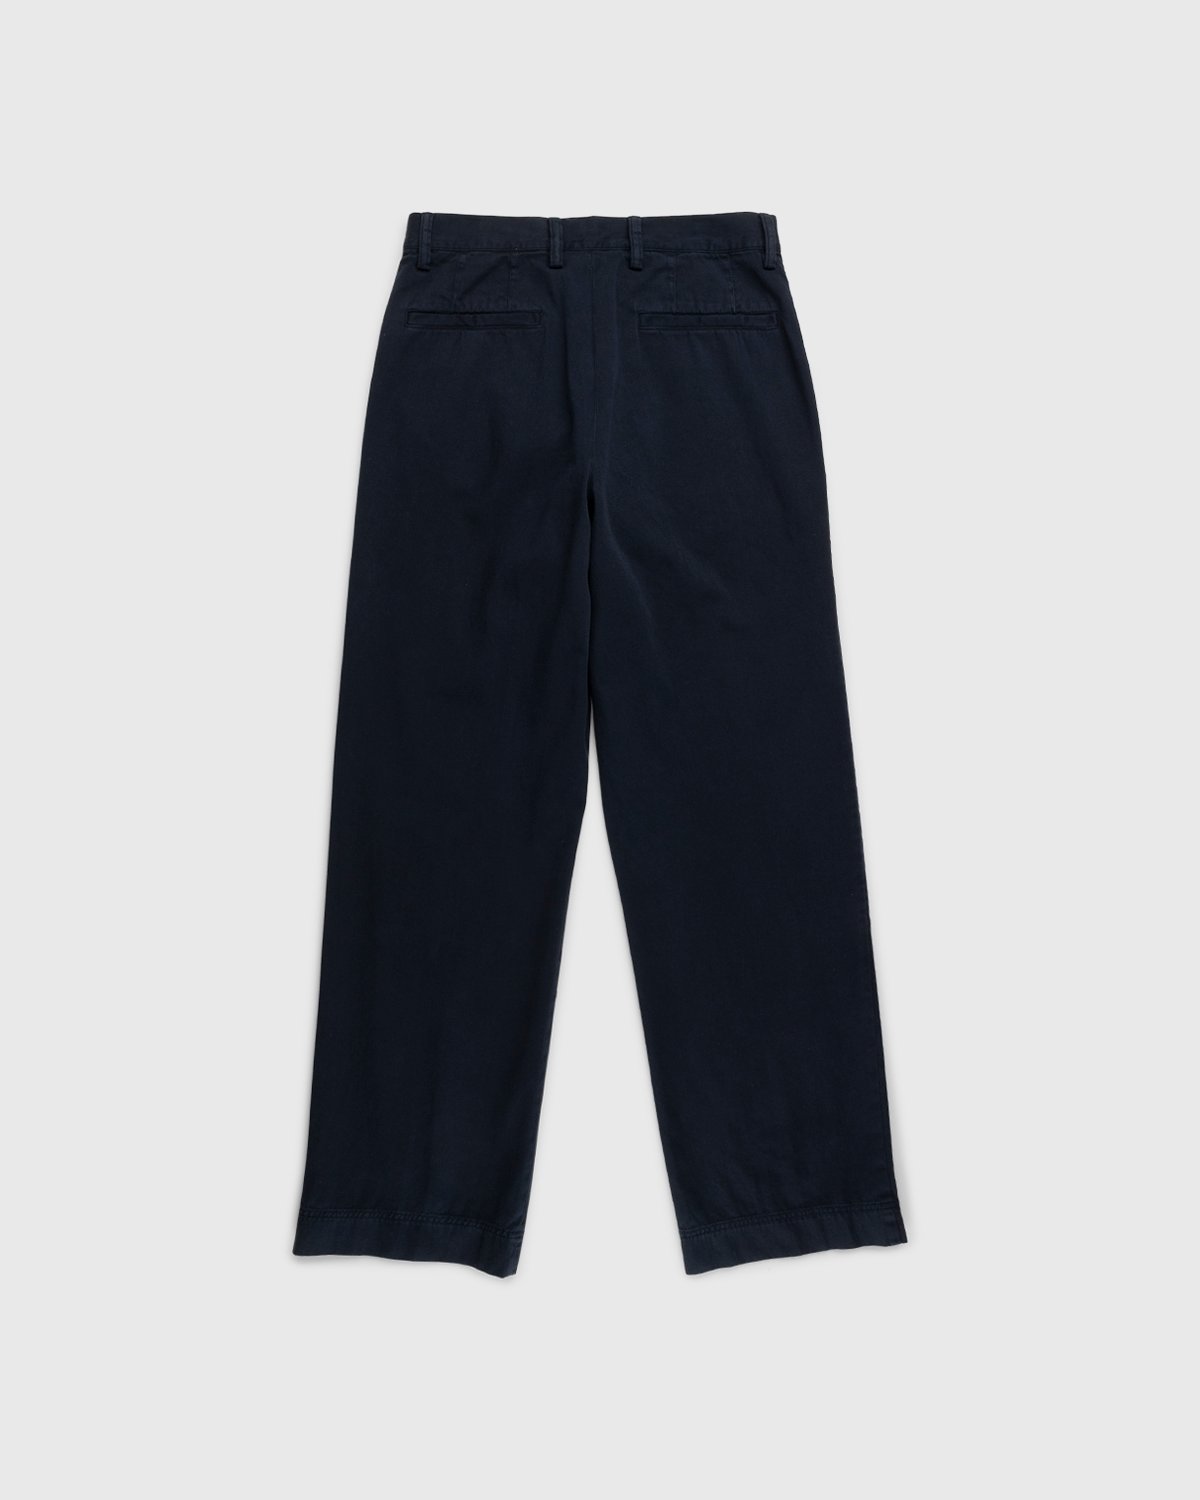 Dries van Noten - Pilson Pants Navy - Clothing - Blue - Image 2